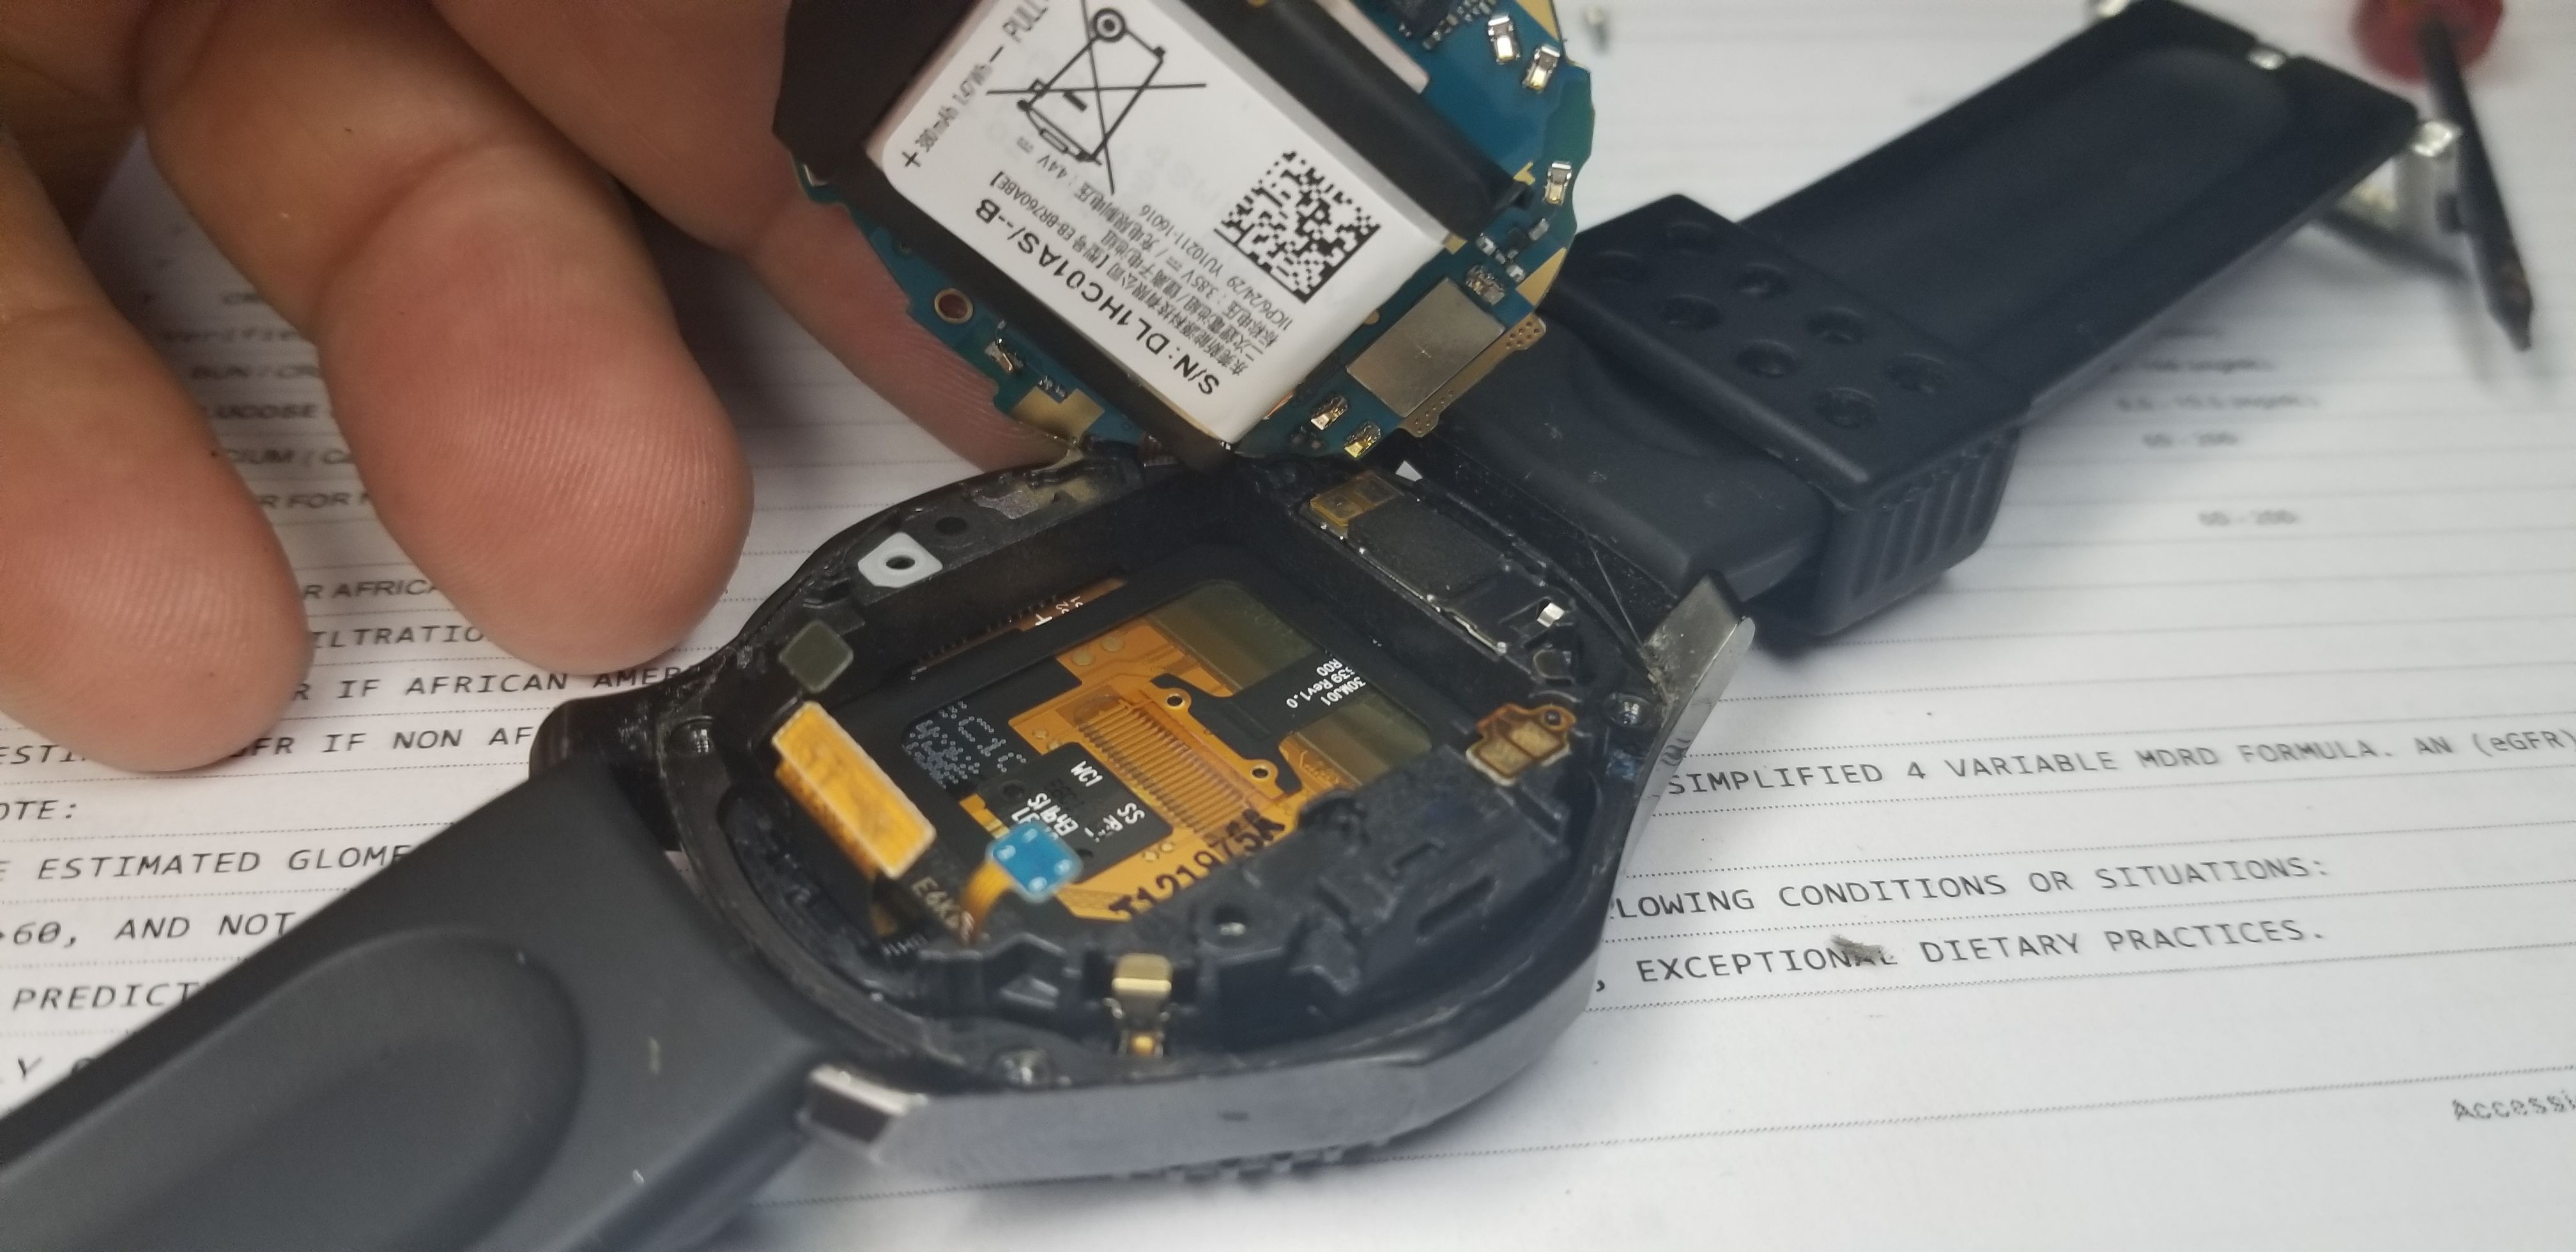 Gear S3 Classic watch stuck in reboot loop - Samsung Community